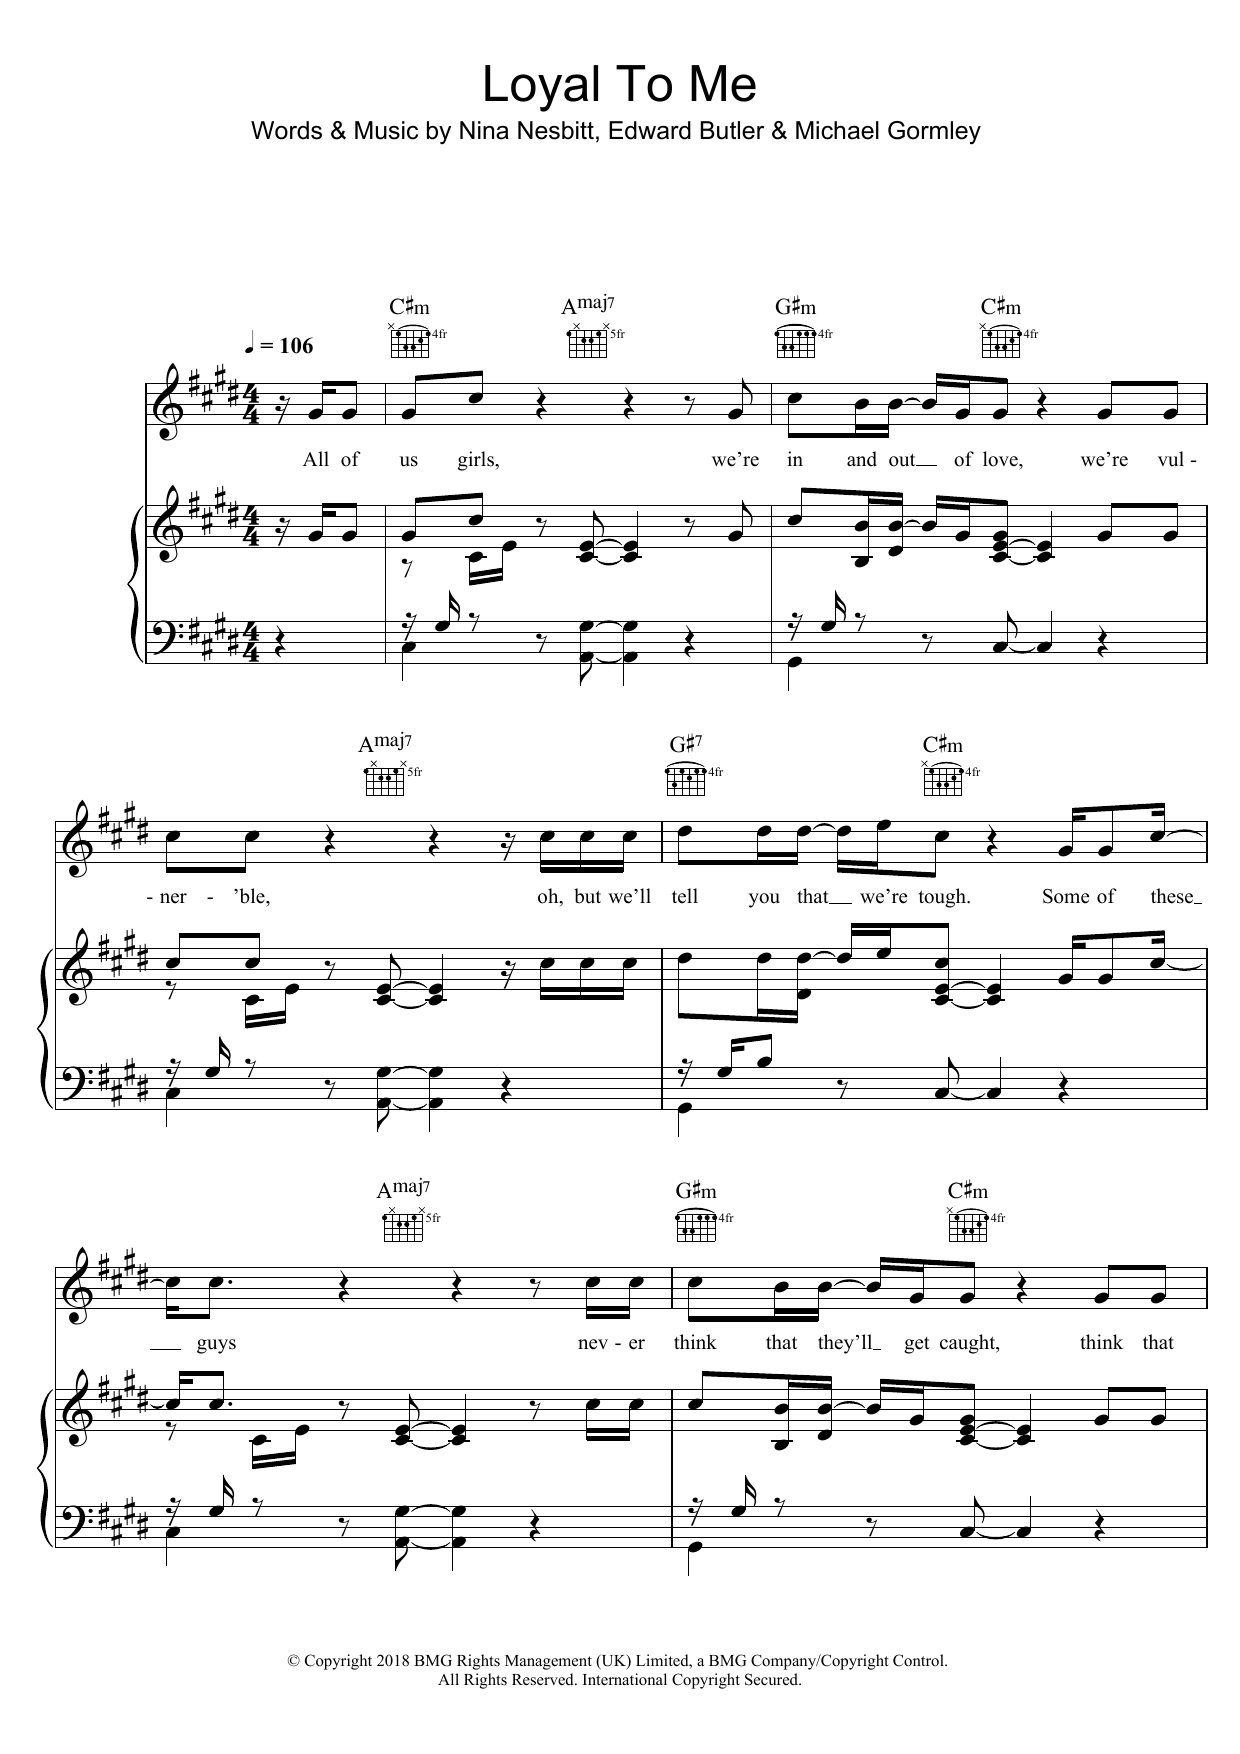 Nina Nesbitt Loyal To Me Sheet Music Notes & Chords for Piano, Vocal & Guitar (Right-Hand Melody) - Download or Print PDF